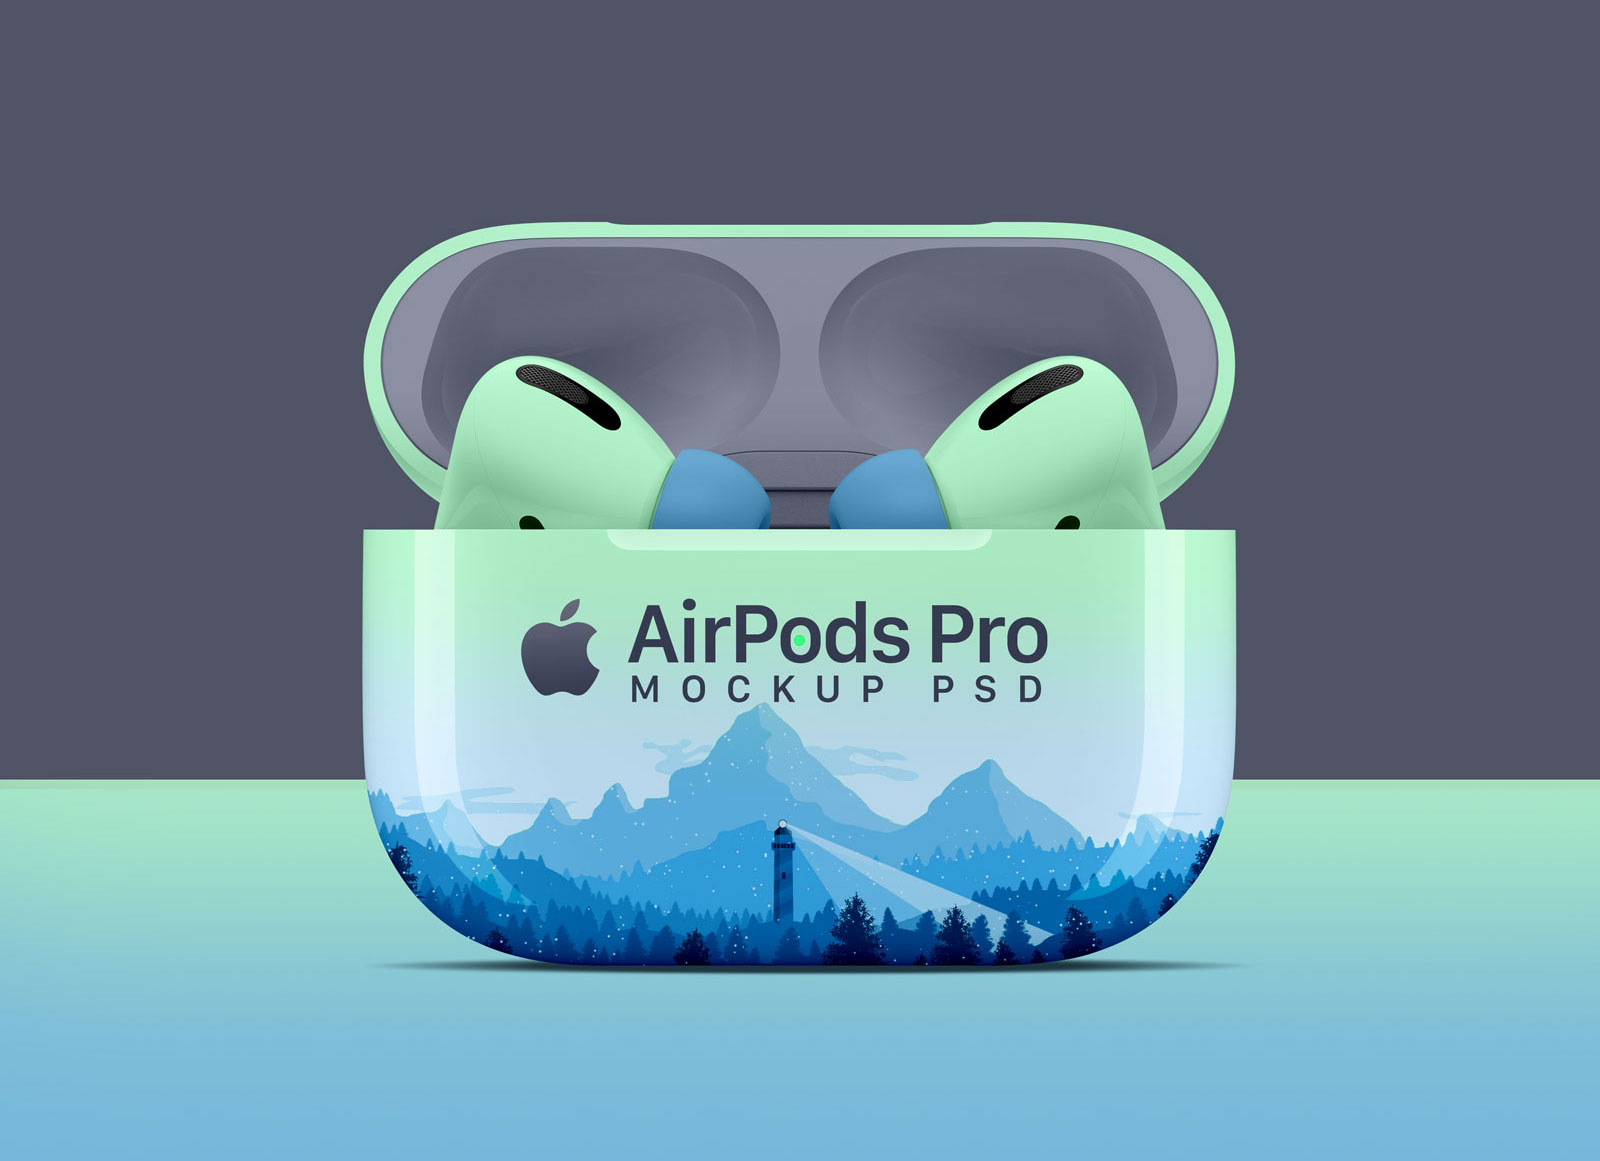 Download Free AirPods Pro Mockup PSD - Good Mockups